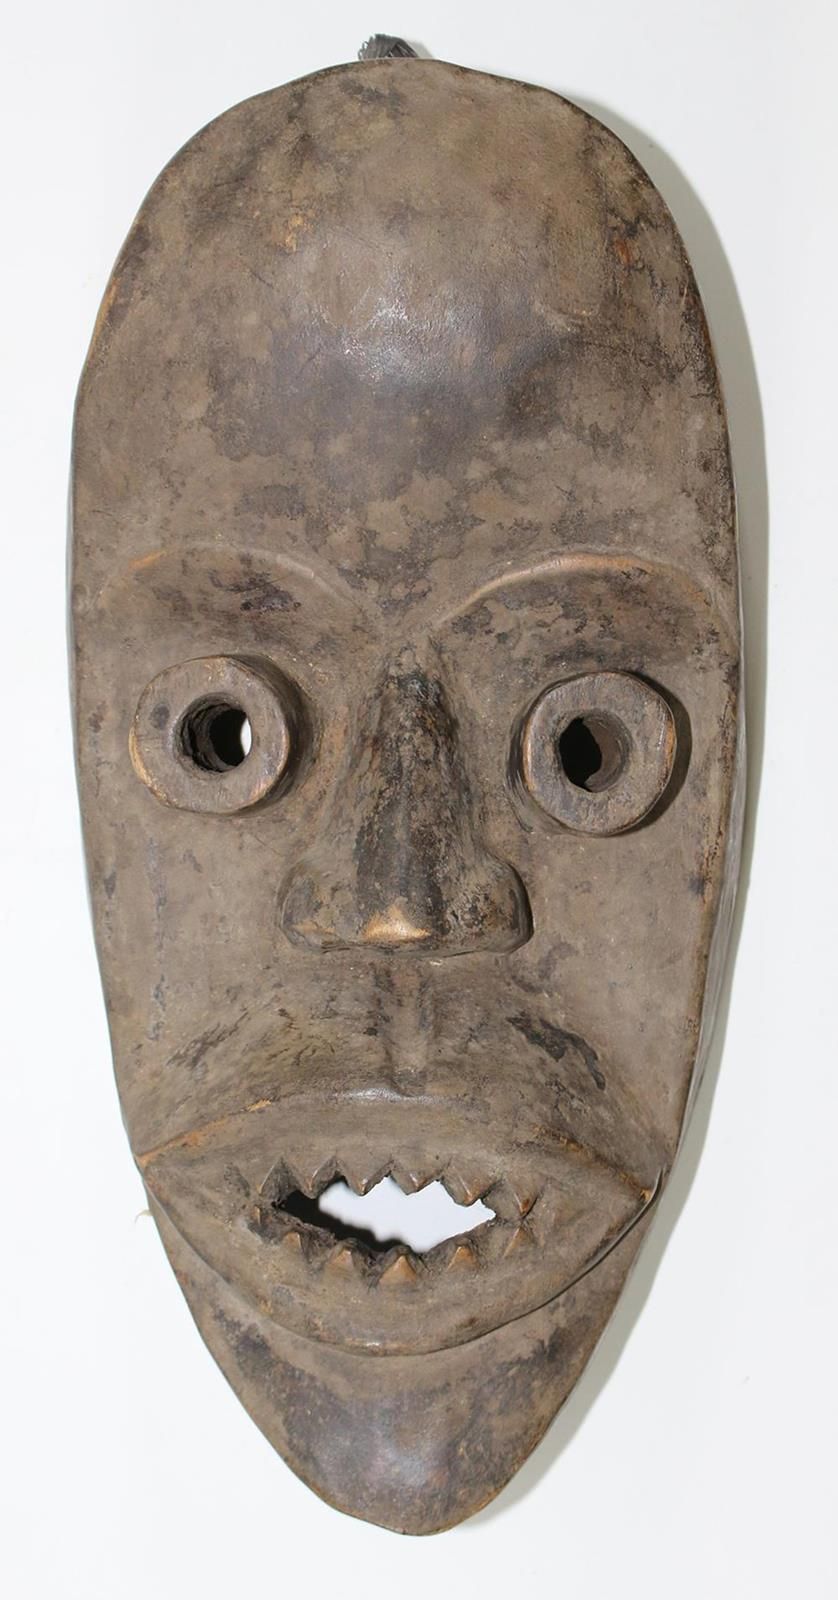 3 Masken Dan Liberia. 典型的简单面具。其中，有一个带有时尚眼睛的火流星面具，一个带有尖牙嘴的面具。有岁月的痕迹和深色的铜锈。35、42和4&hellip;